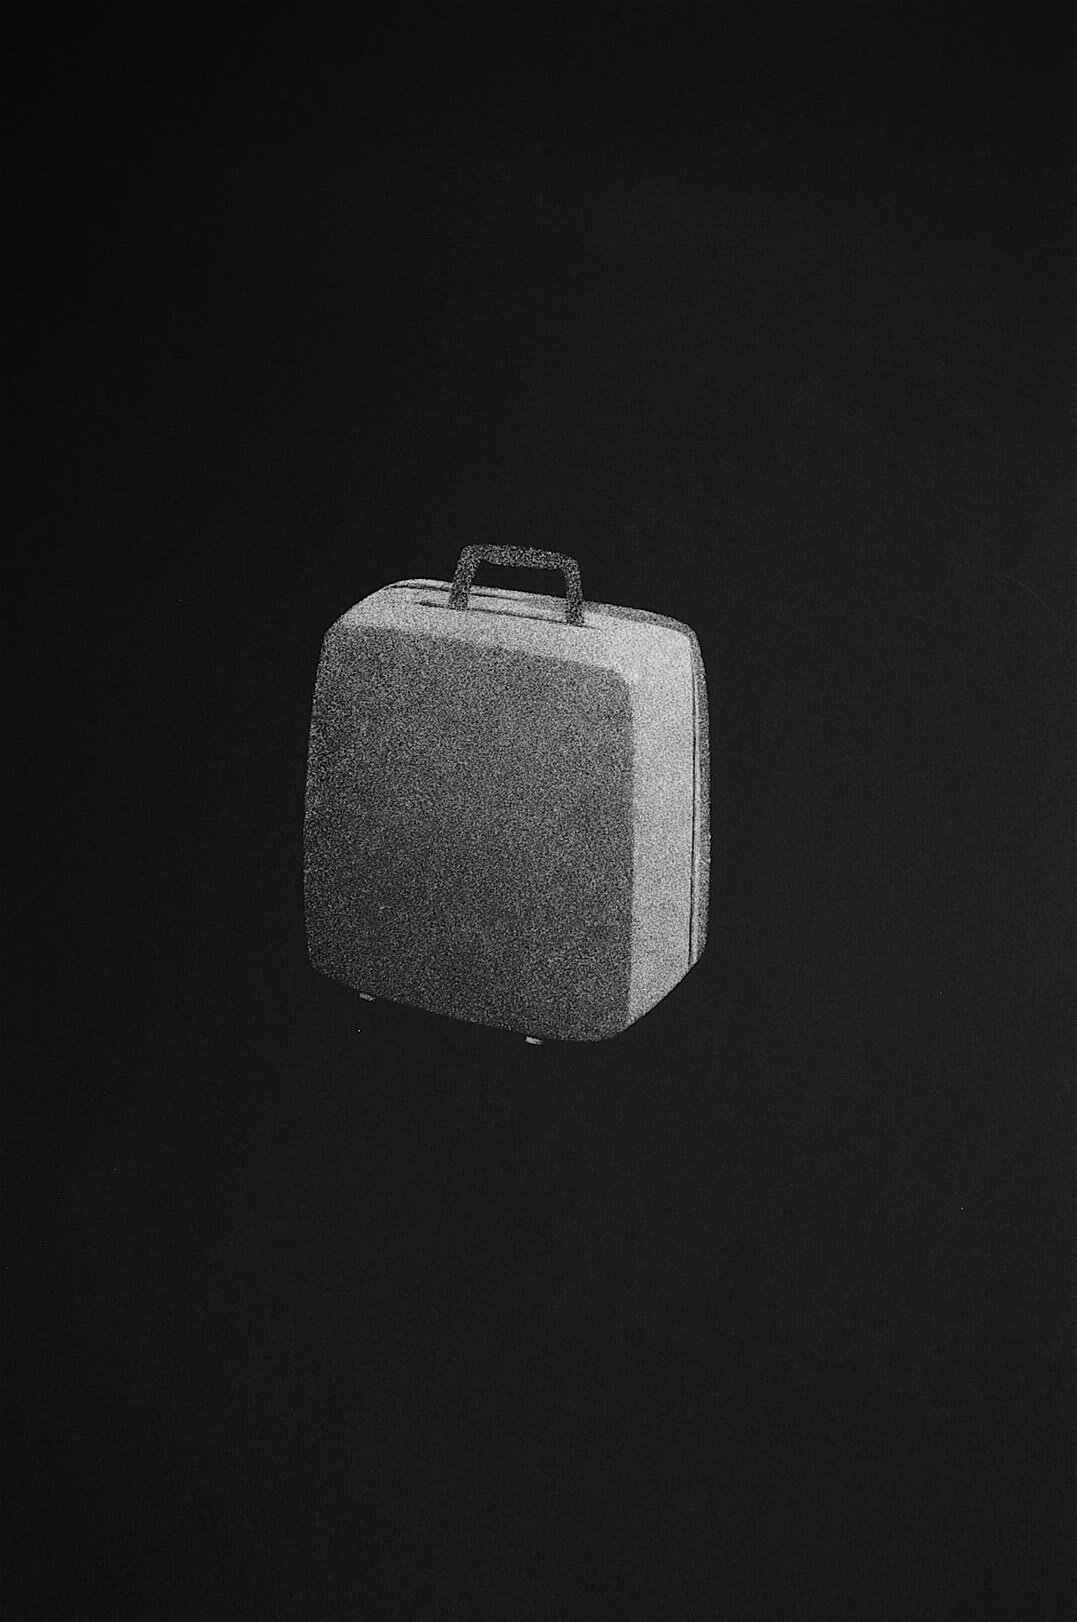  Gaslight #14, 2009, Acrylic on board, 26 x 20 inches / 66 x 50.8 cm 